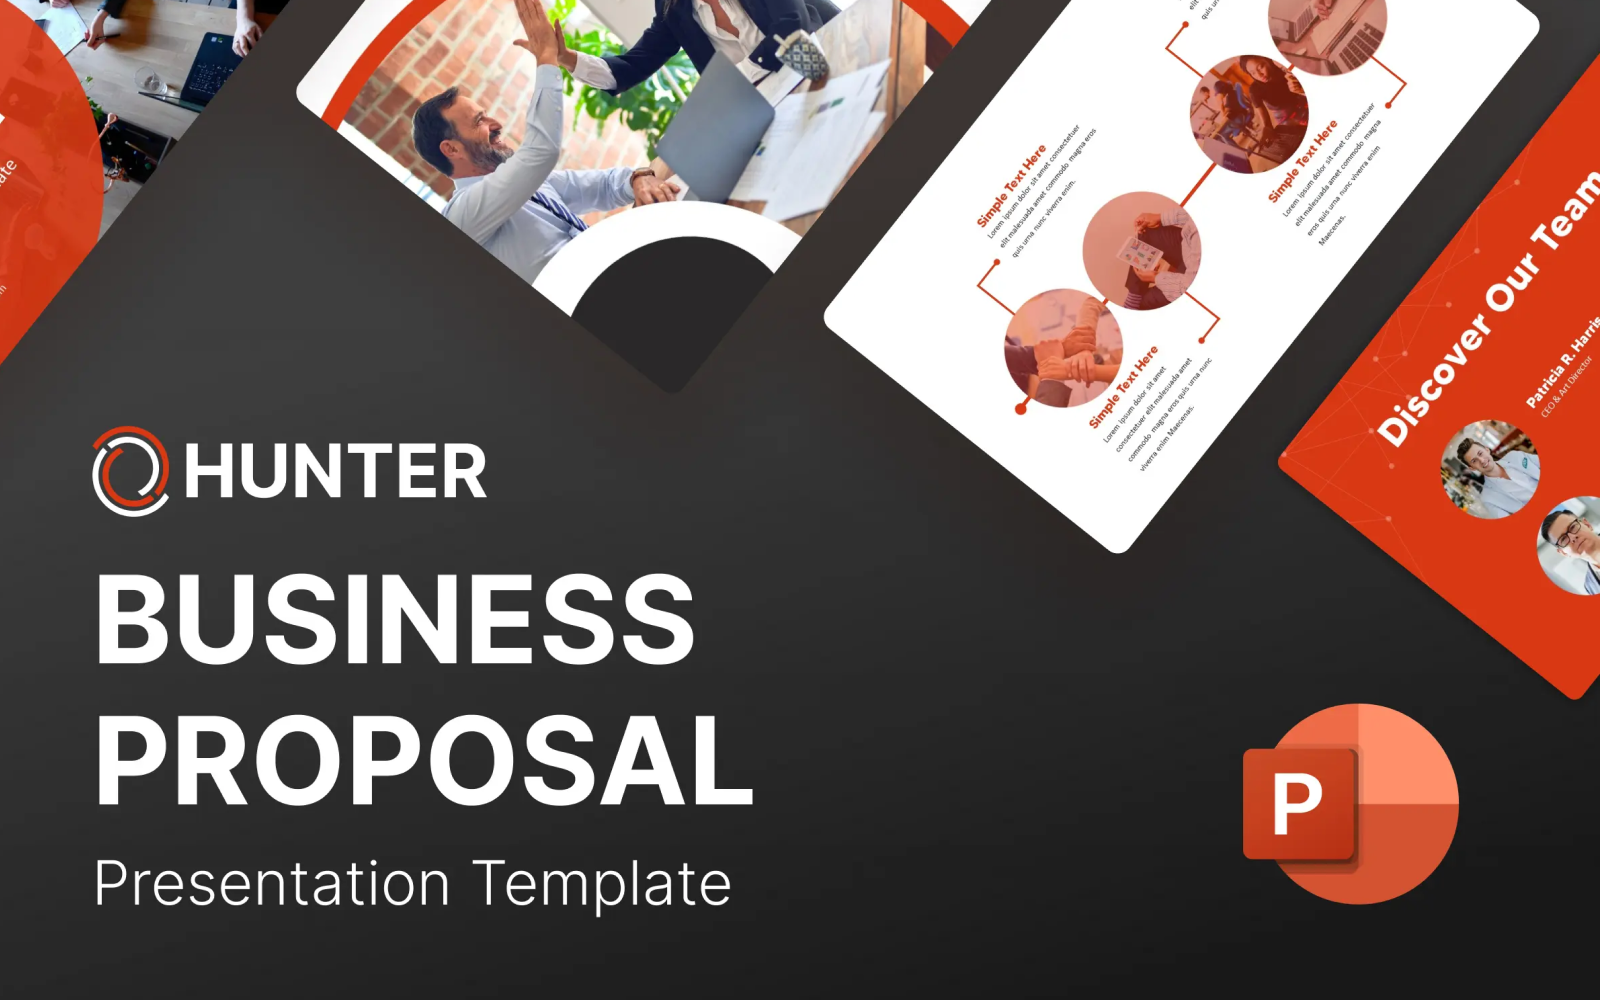 HUNTER Business Proposal – Presentation template